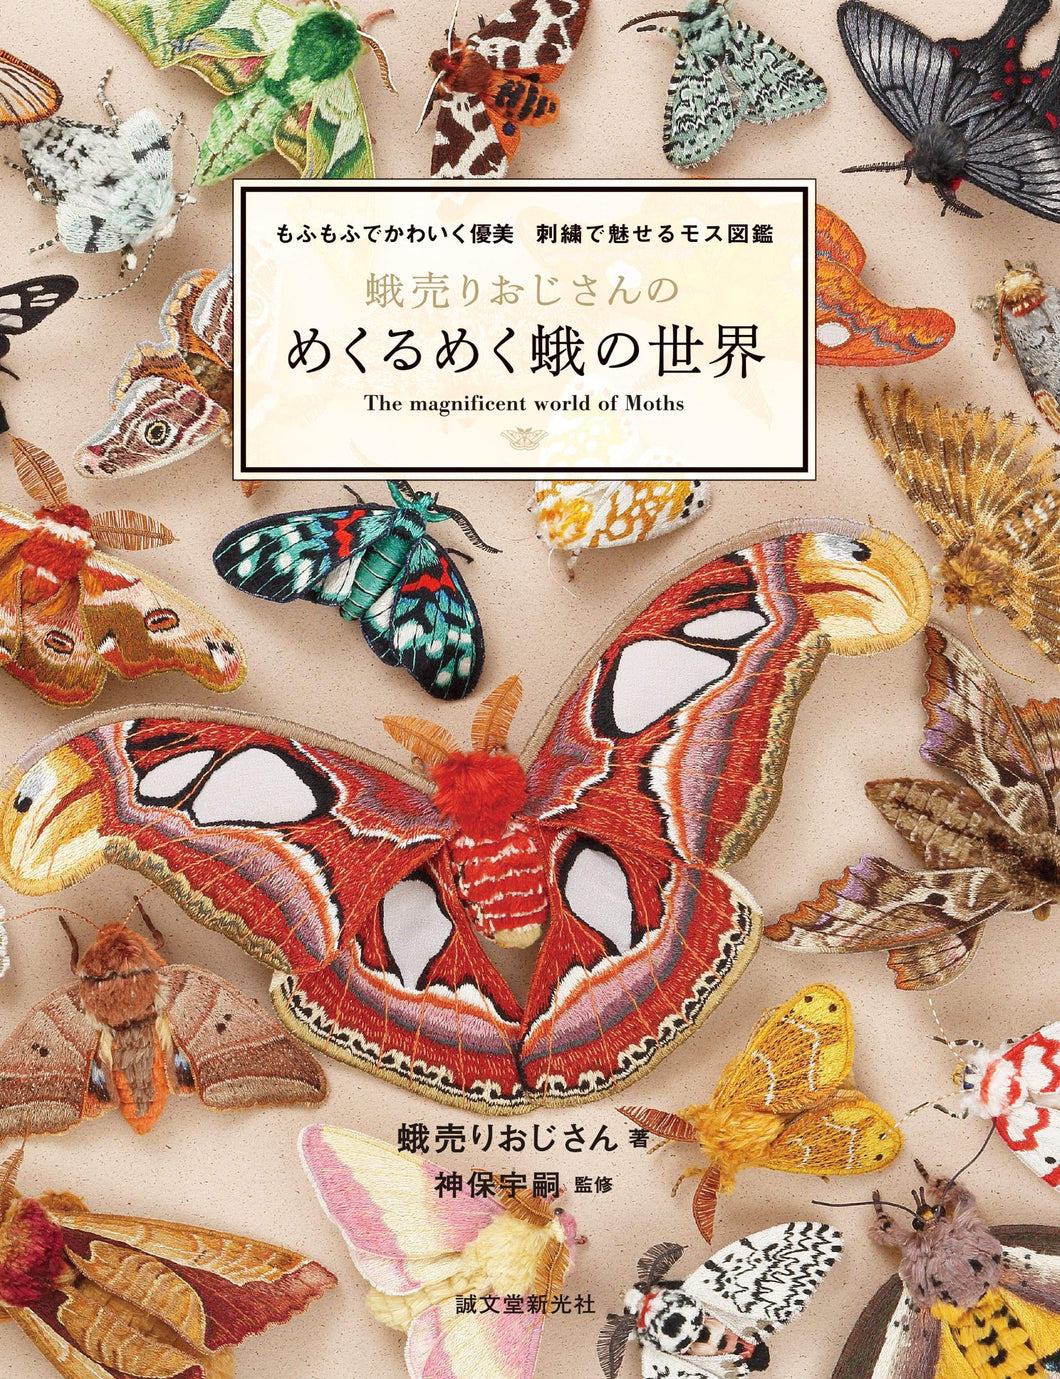 [Signed book] Moth seller's dazzling world of moths